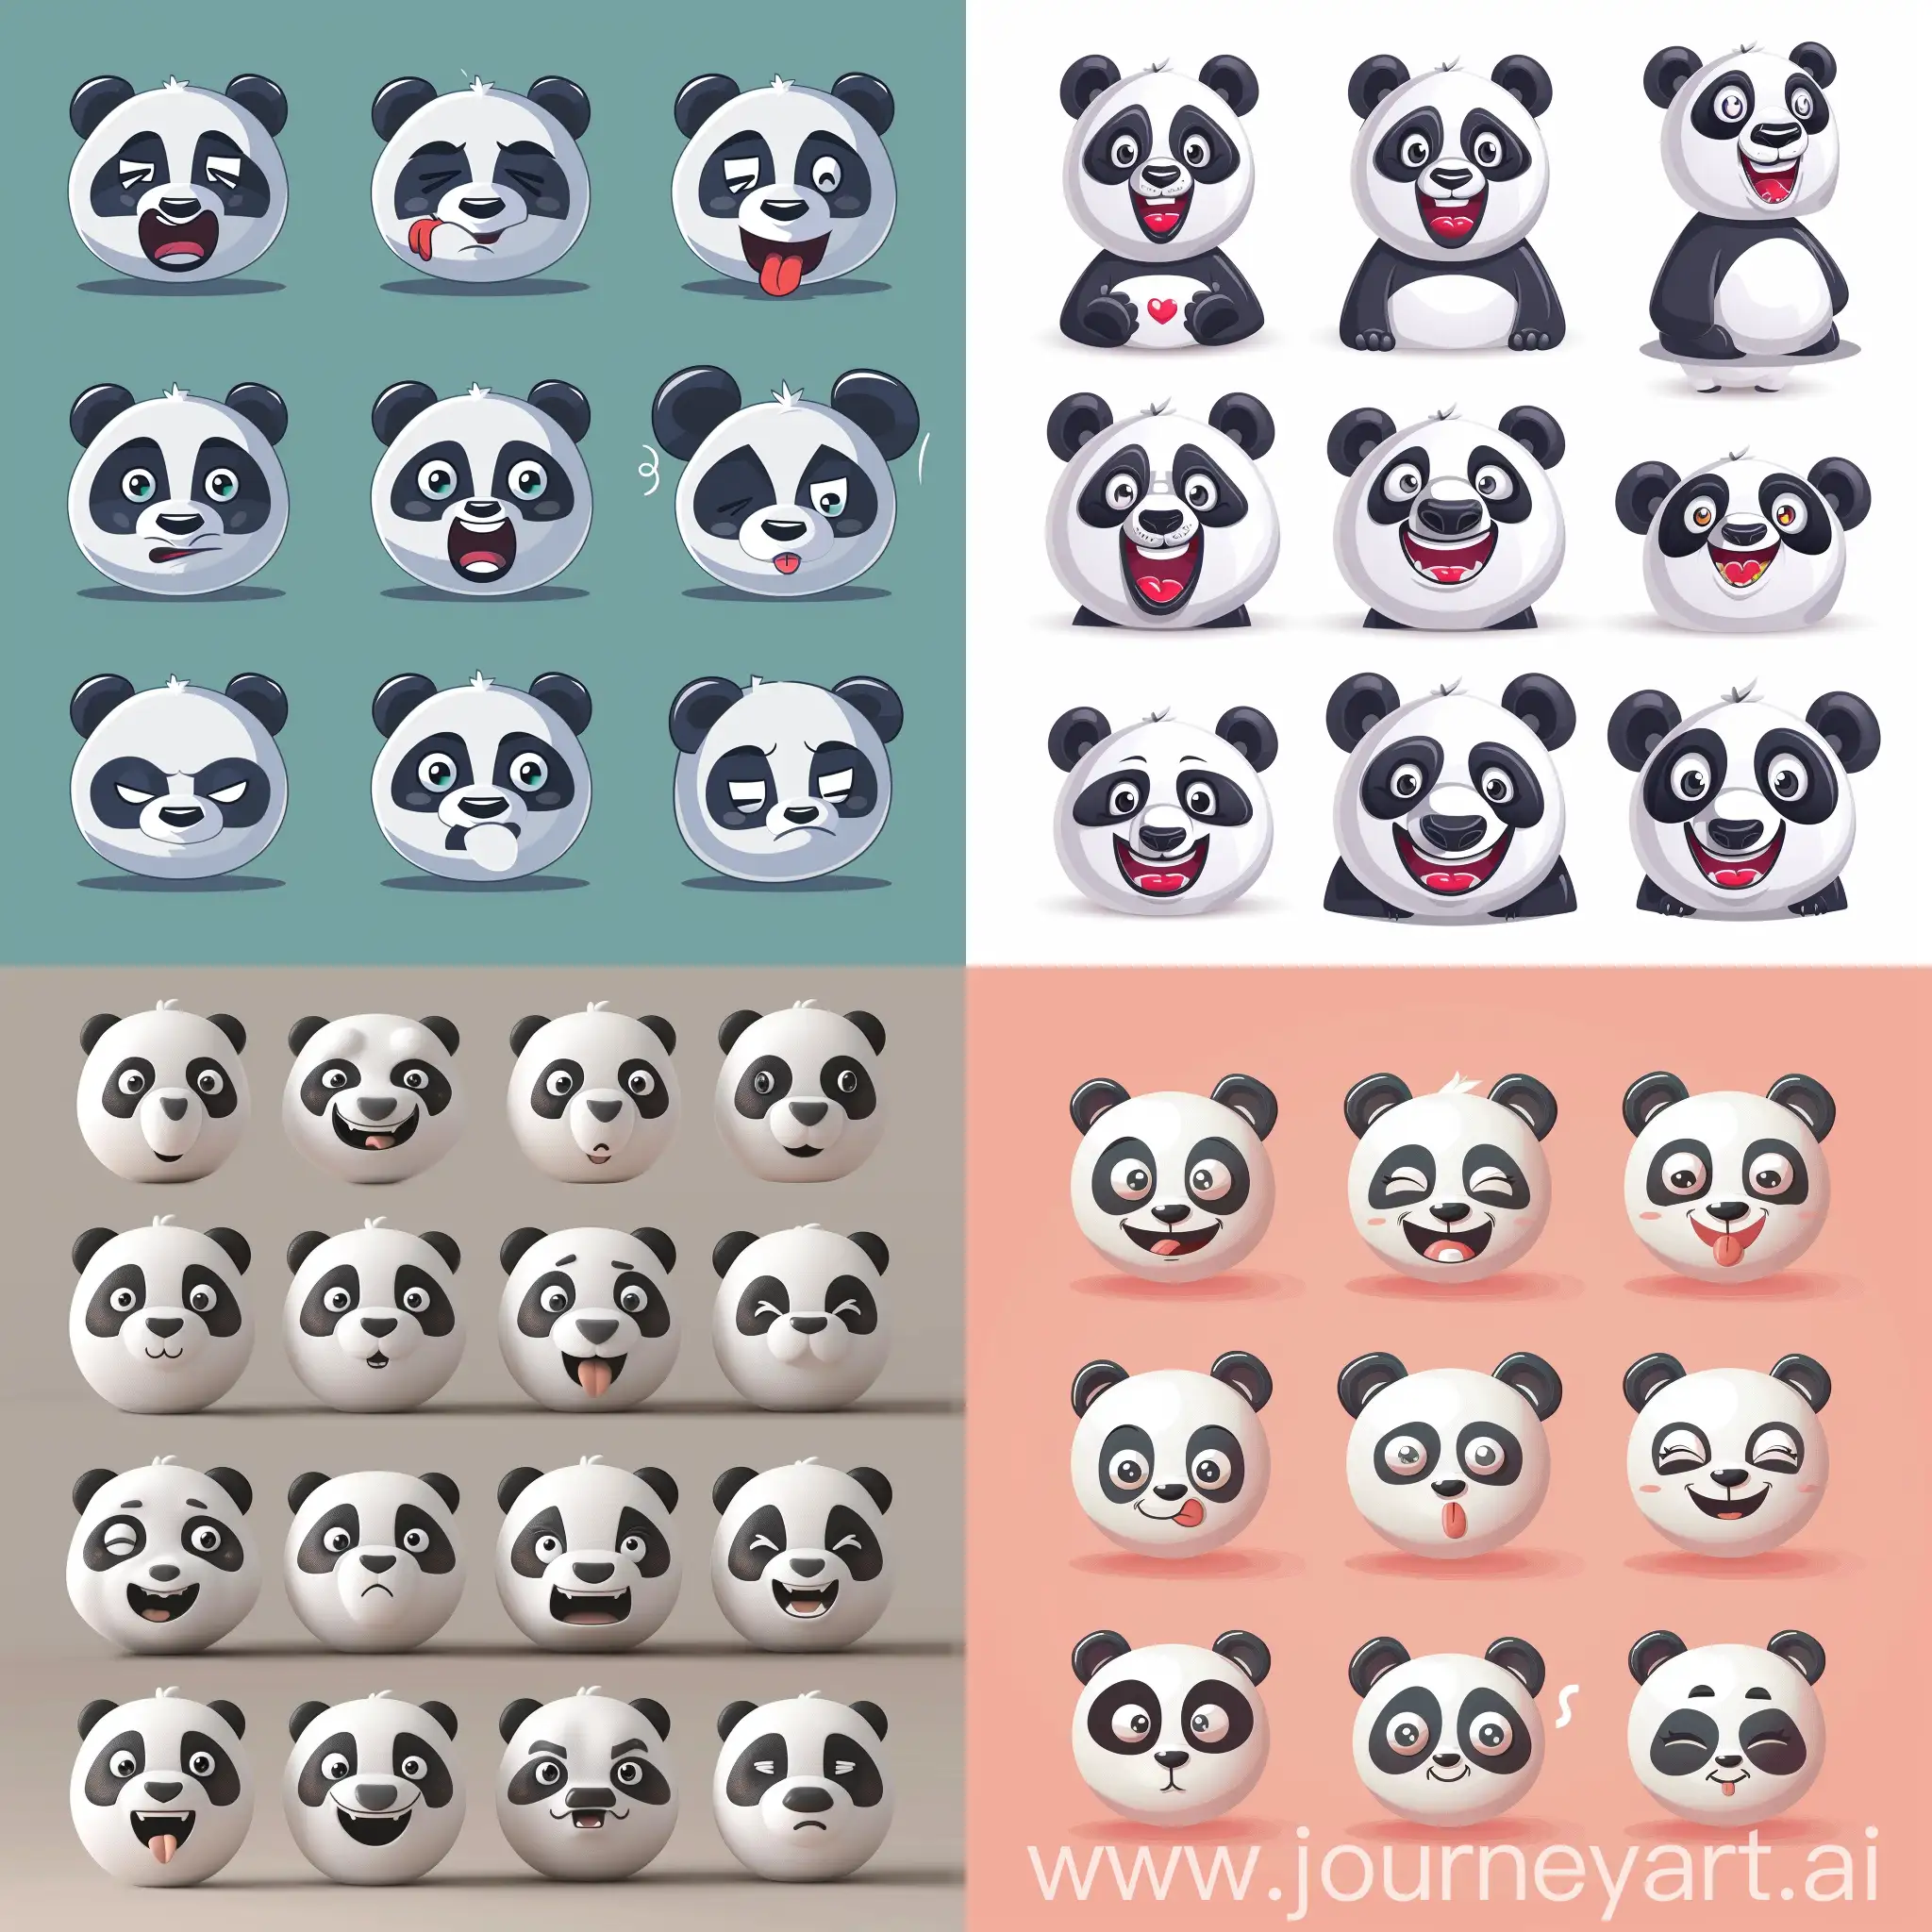 Adorable-Panda-Cartoon-Emoji-Pack-with-80293-Expressive-Variations